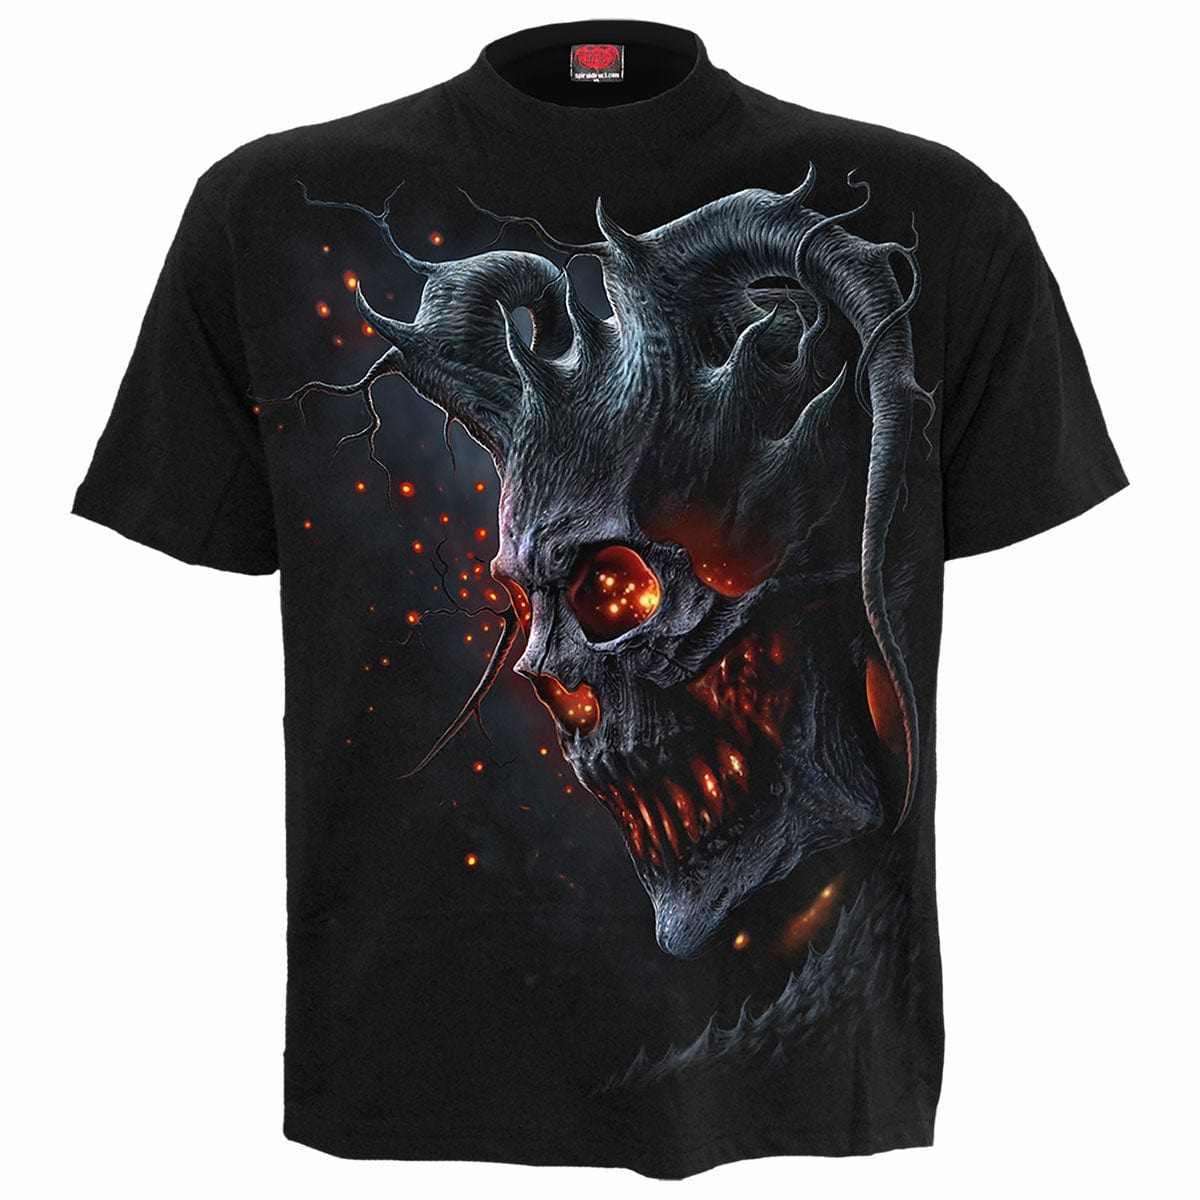 DEATH EMBERS - T-Shirt Black - Spiral USA